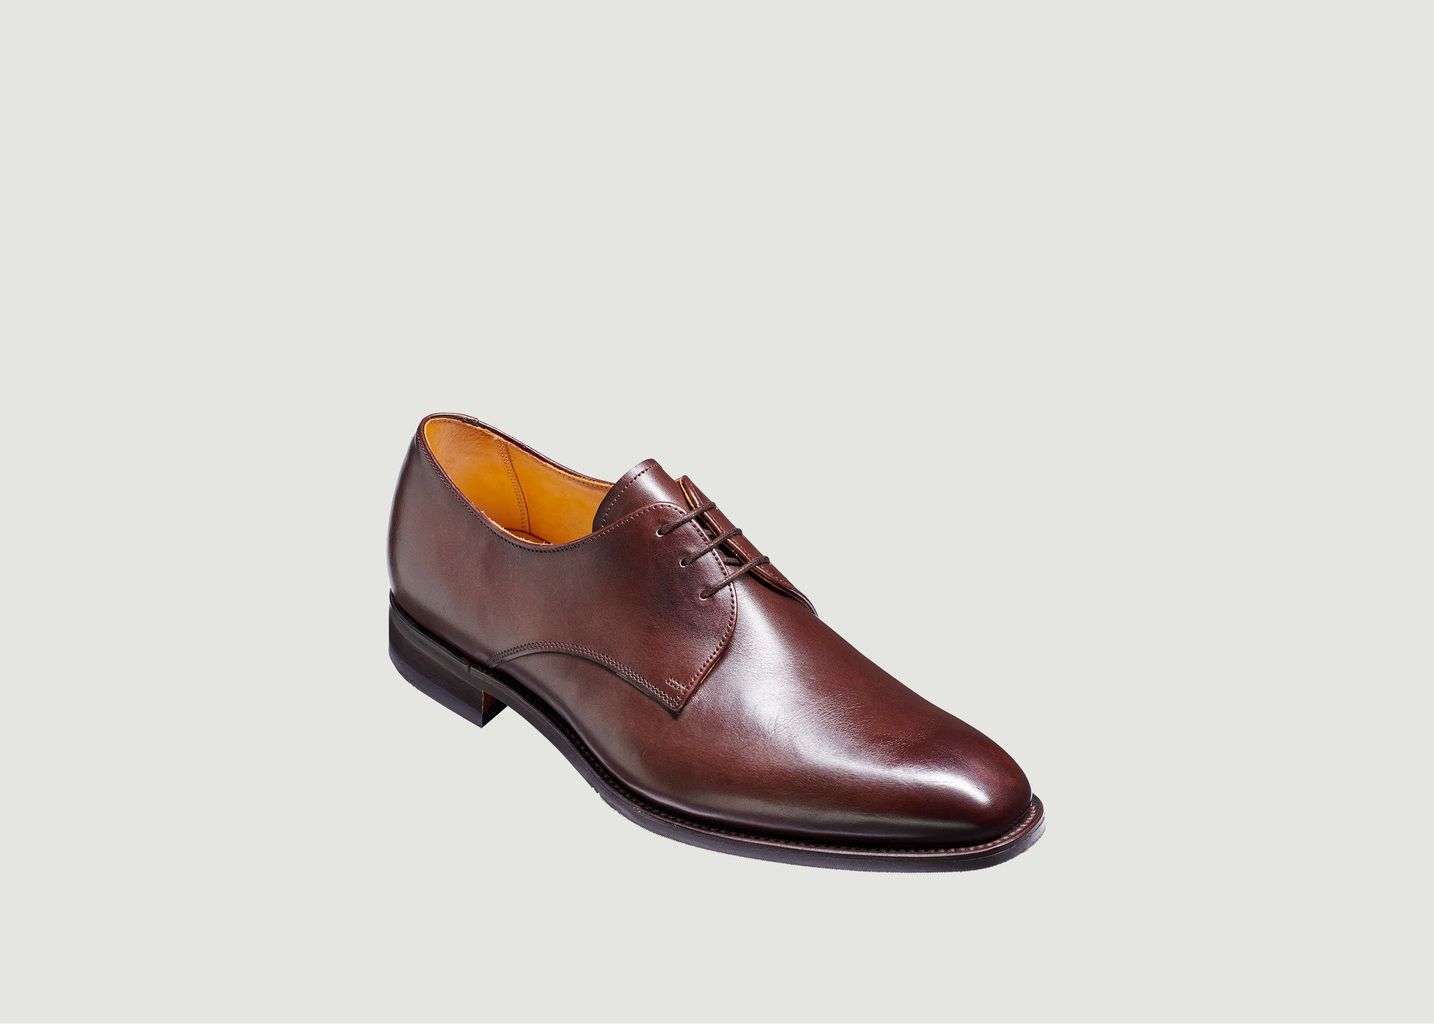 St. Austell Derbies - Barker Shoes